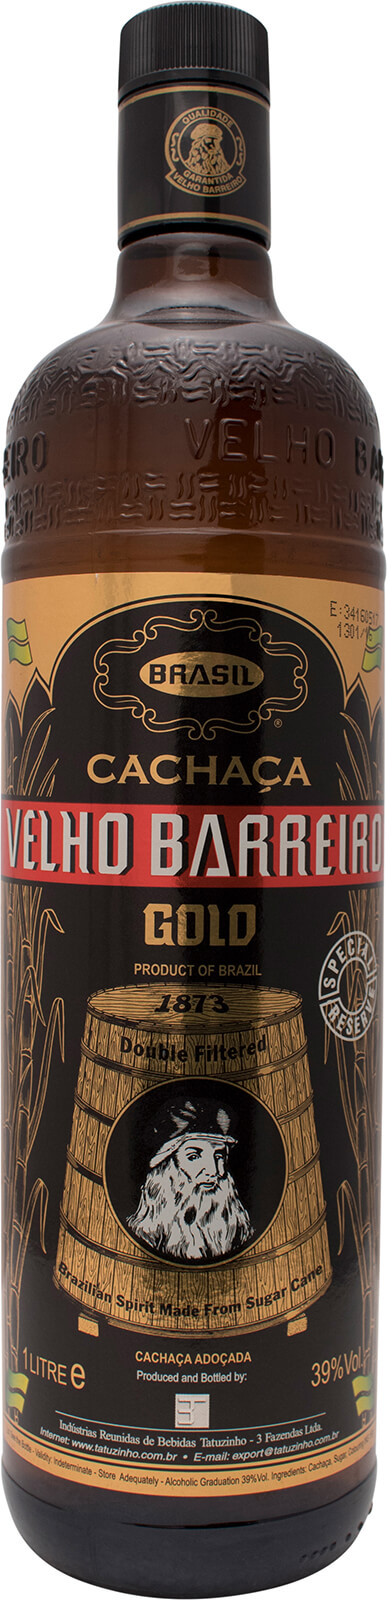 Velho Barreiro 39% (3 1 Gold Liter Jahre) Cachaca